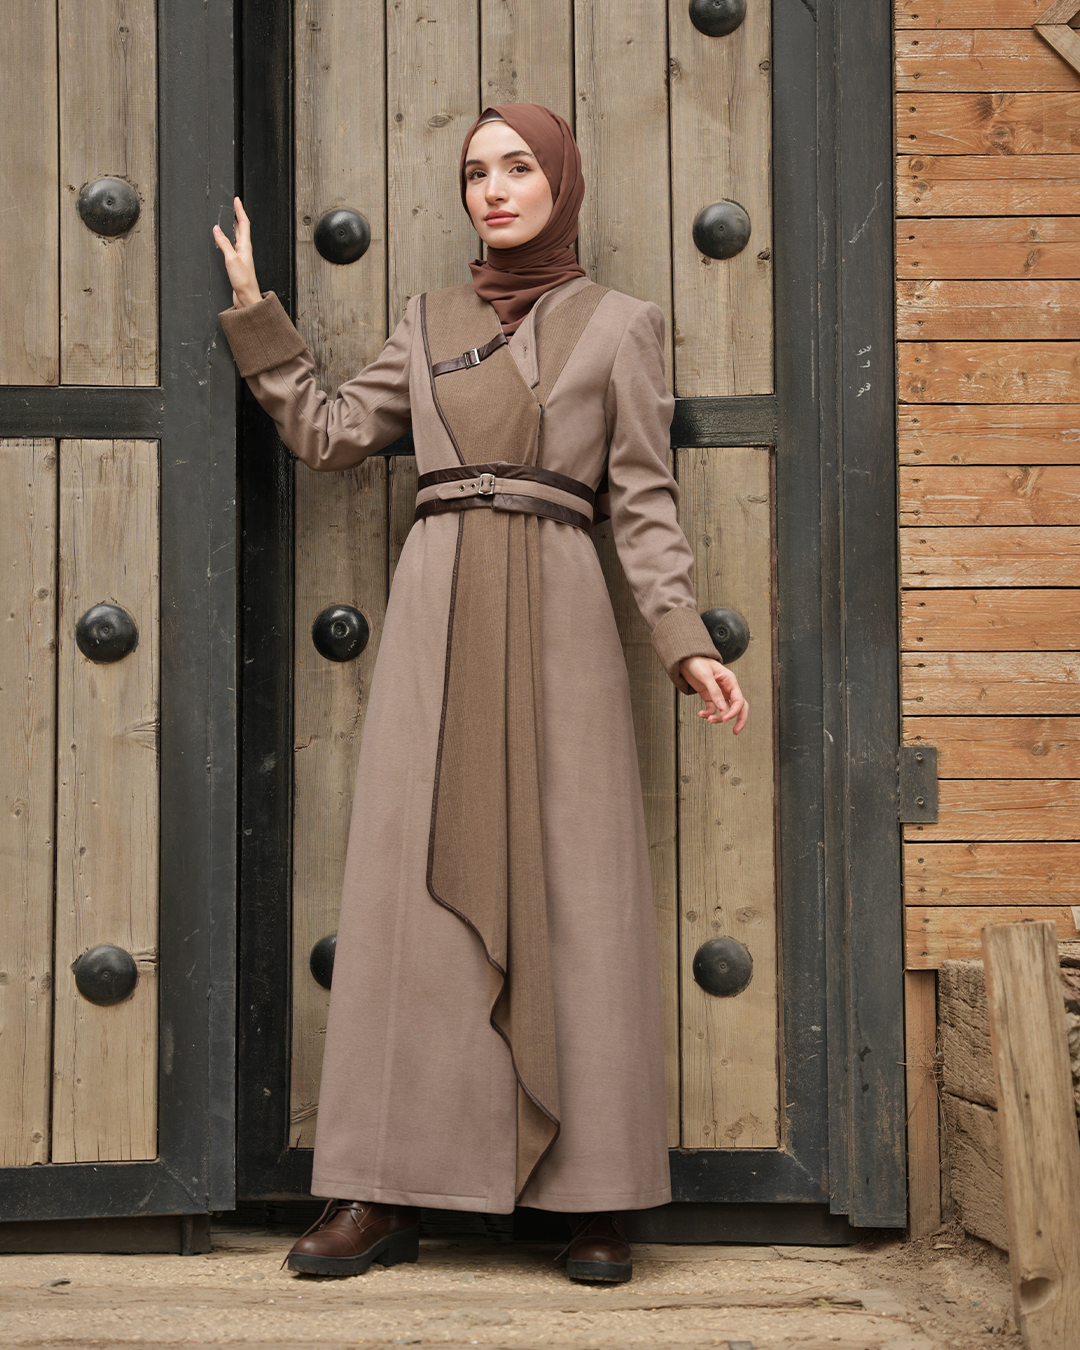 Stay Fashion-Forward with Our Latest Jilbab Styles